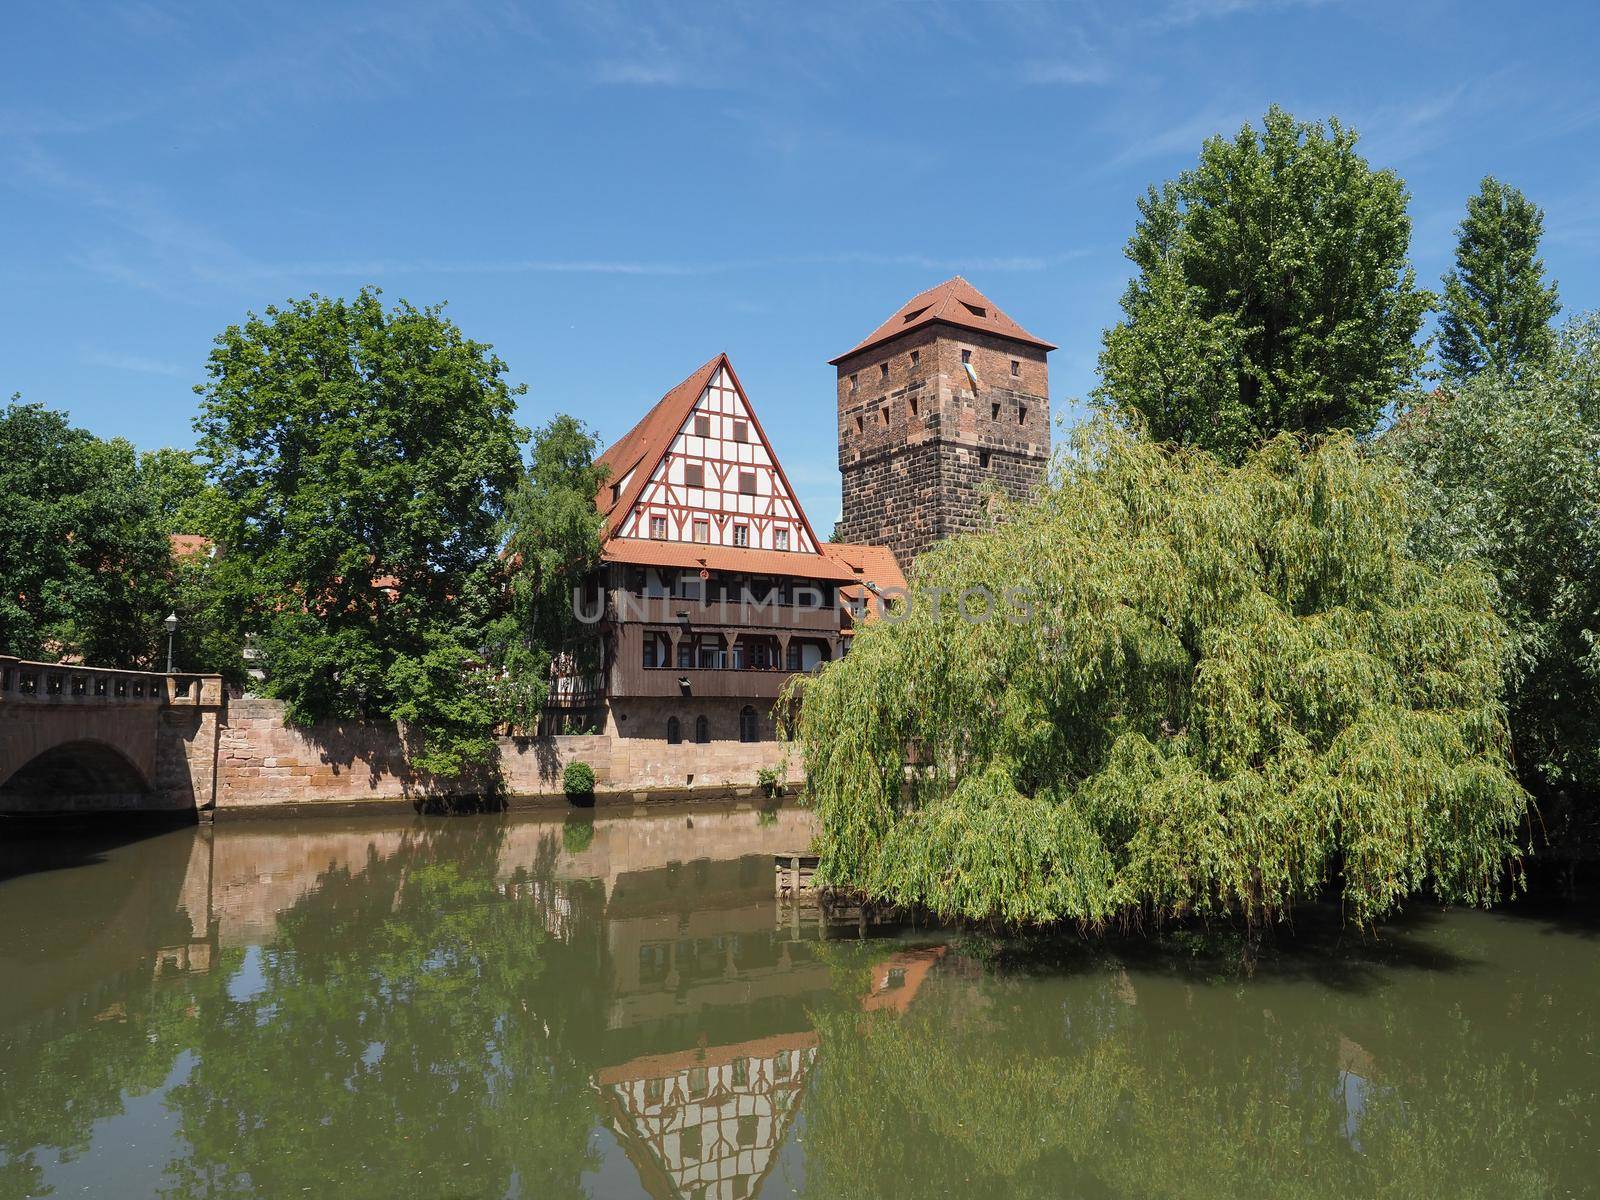 Weinstadel translation wine barn medieval building by river Pegnitz in Nuernberg, Germany